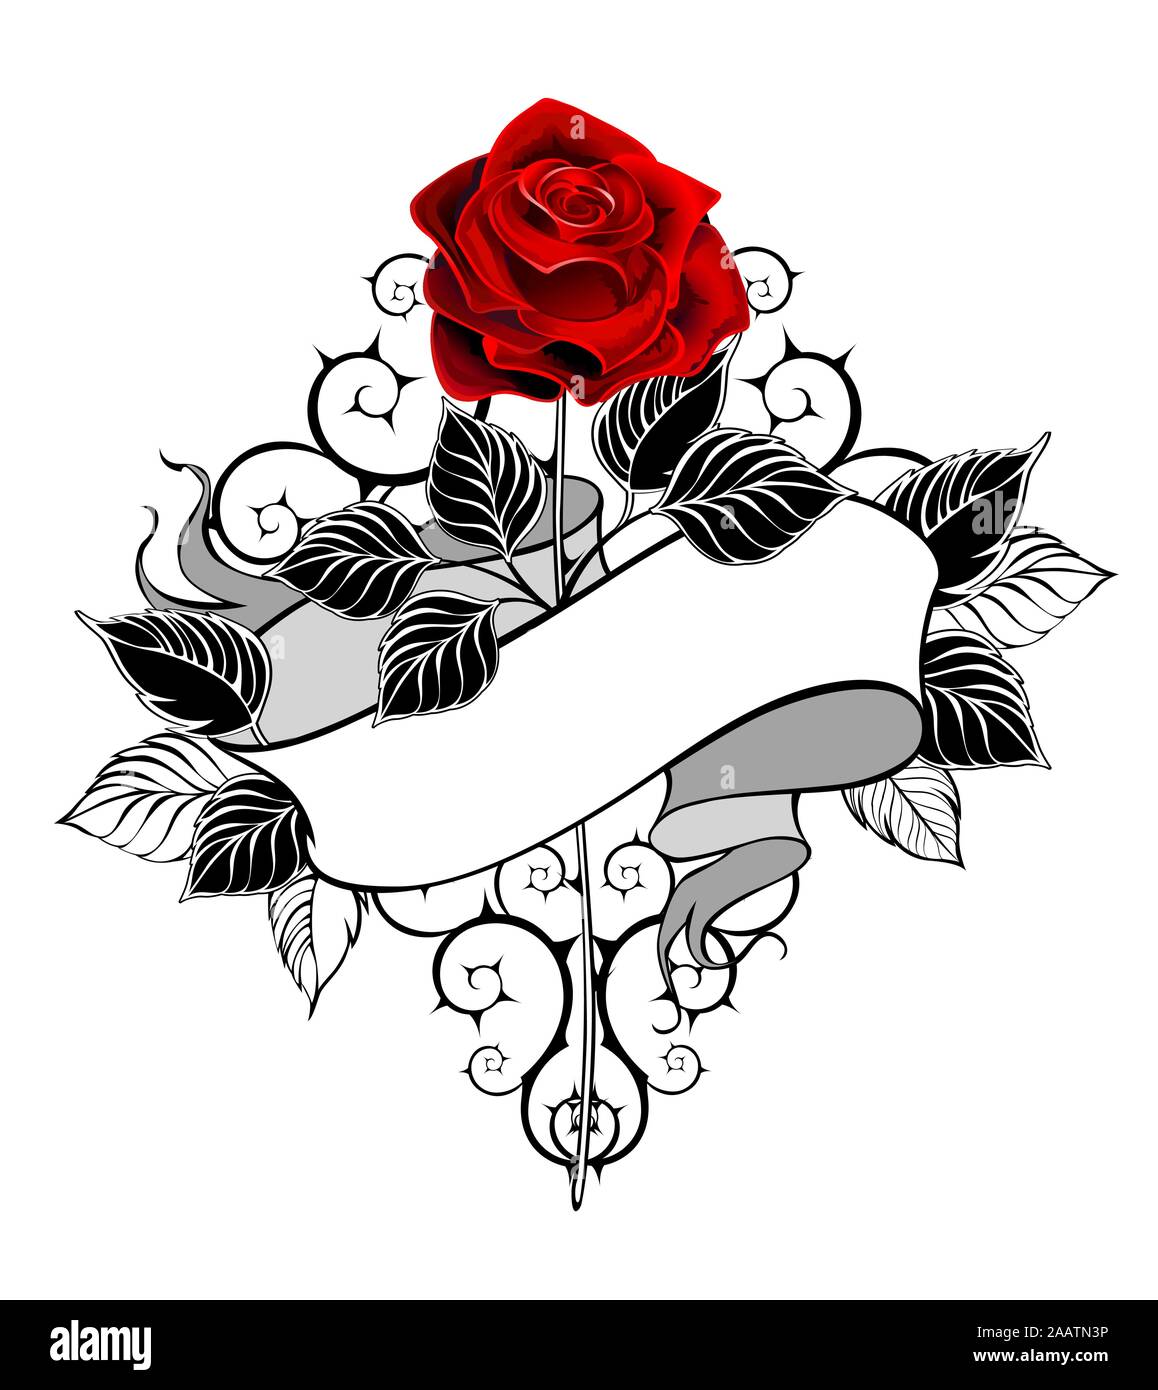 25 Stunning Rose Tattoo Designs  2023